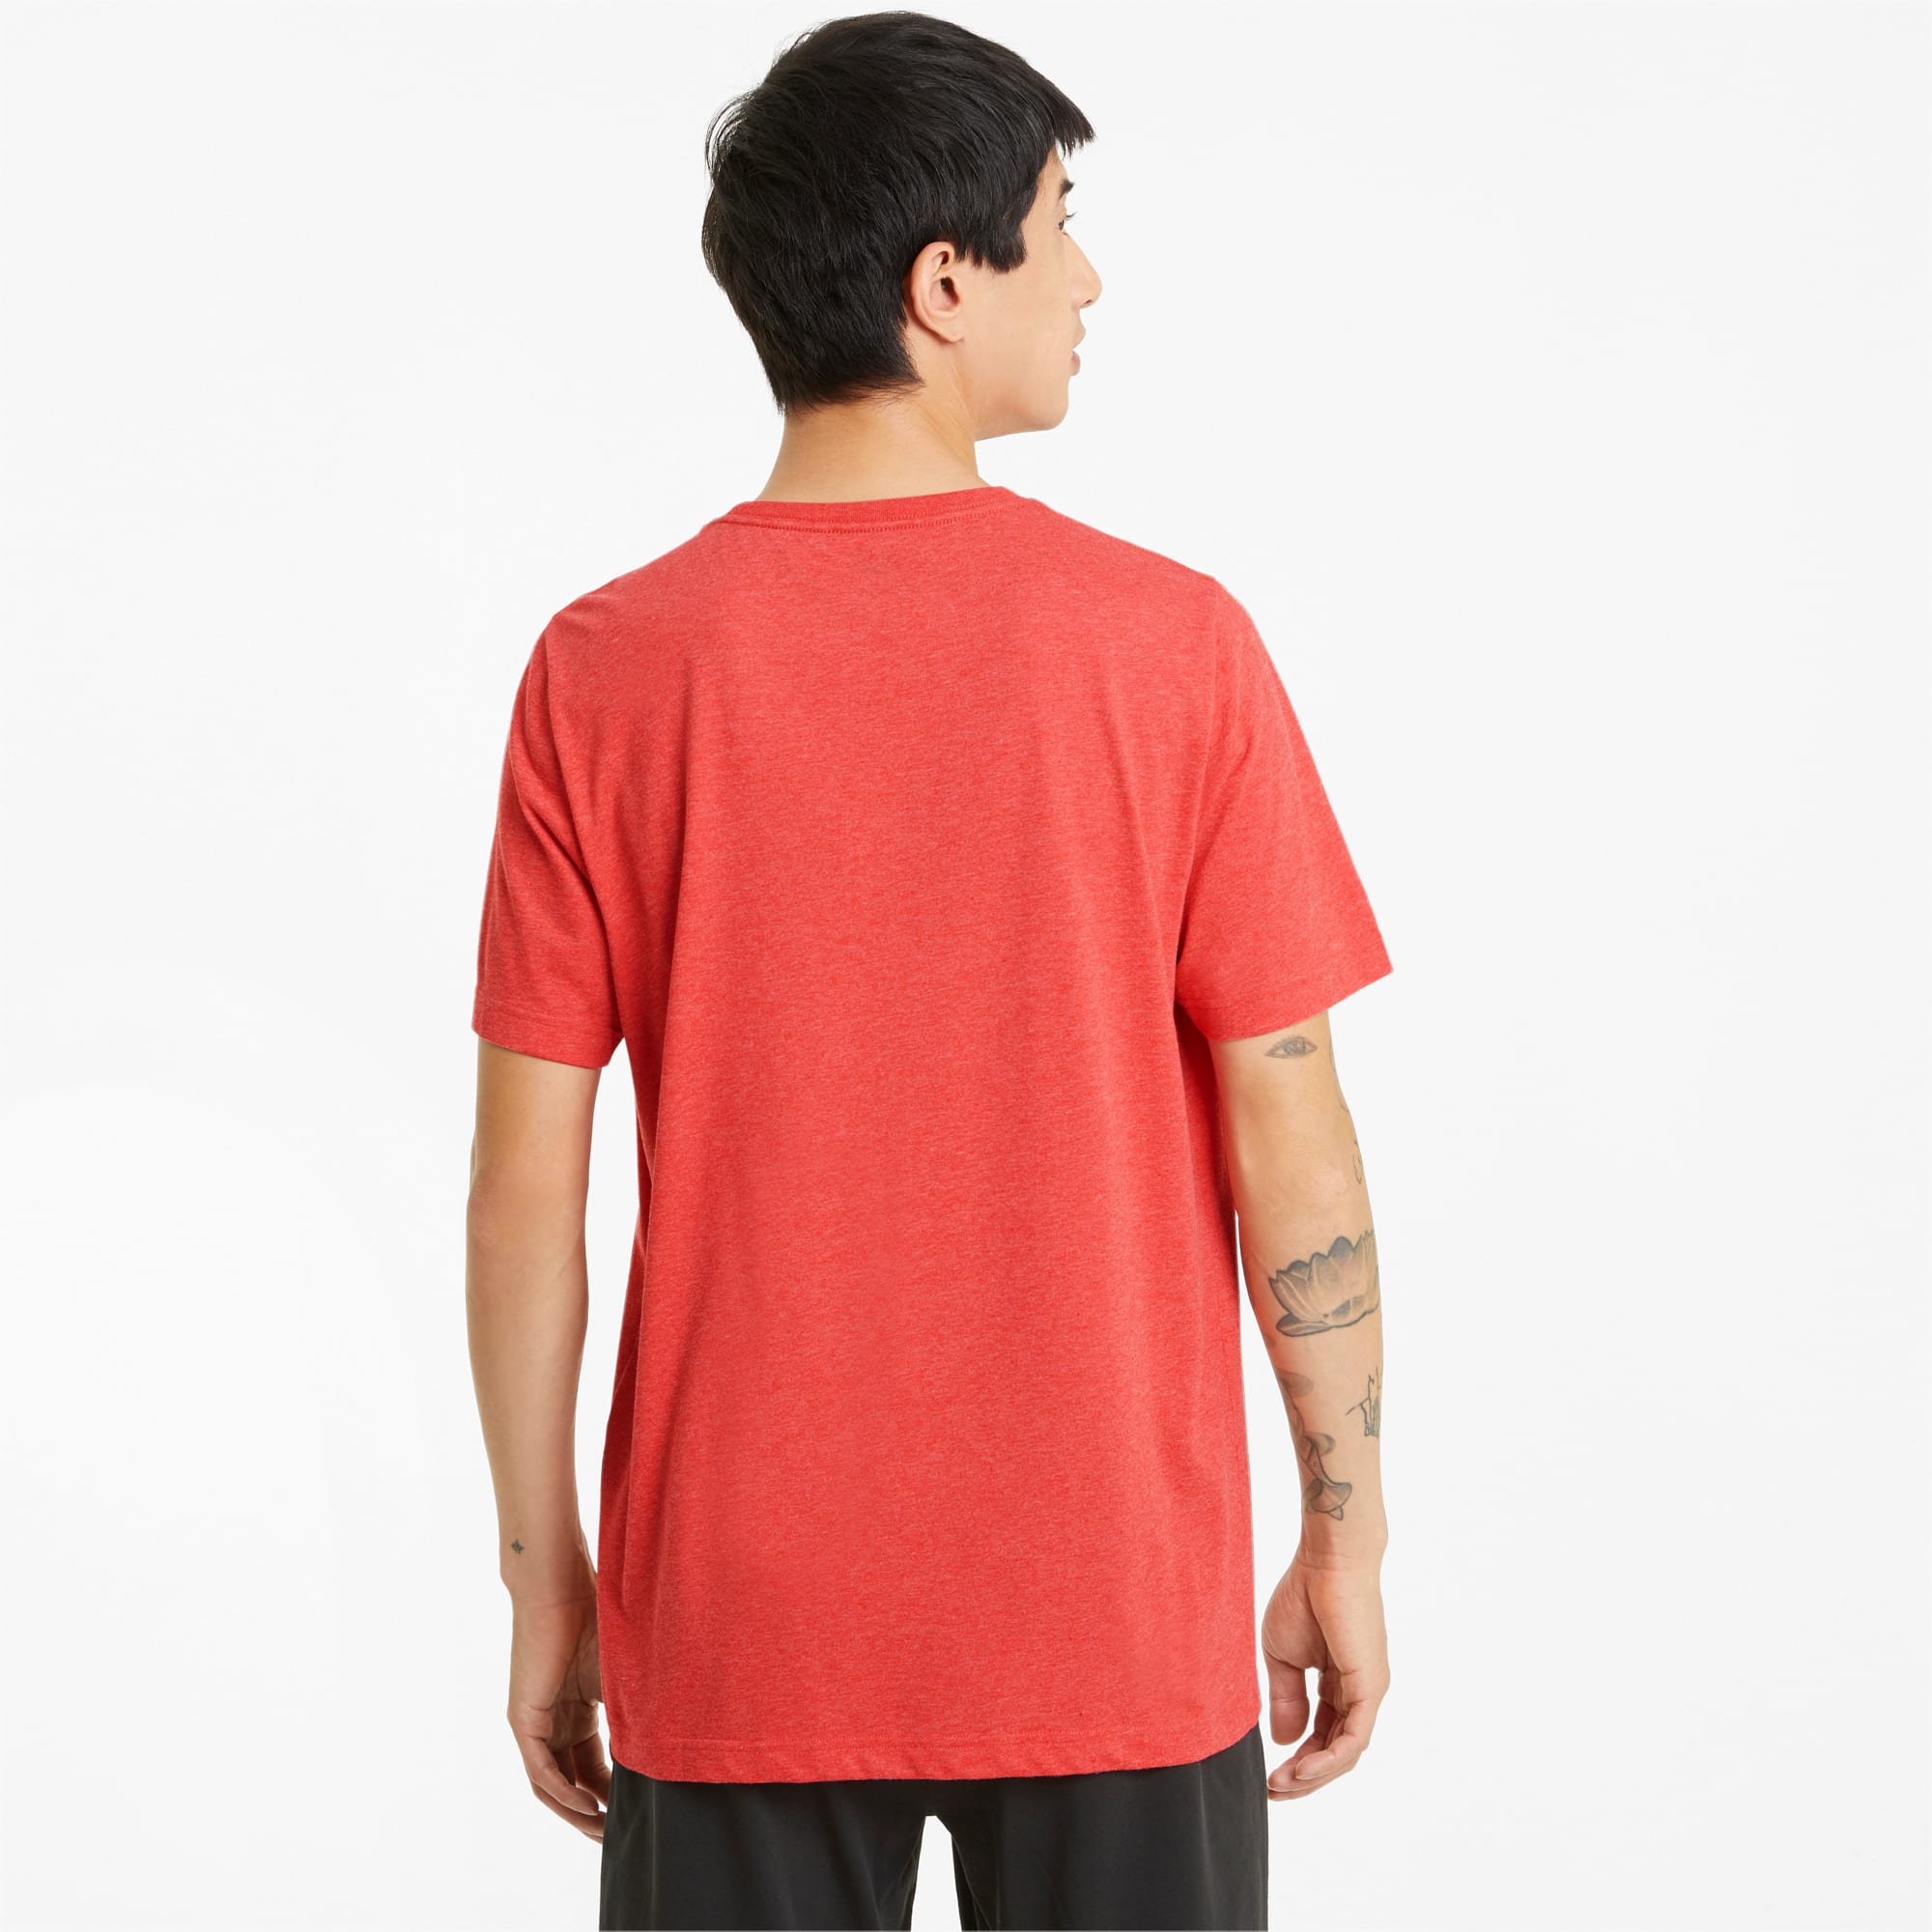 PUMA Essentials Heather Men's T-Shirt, High Risk Red, Size 5XL, Clothing